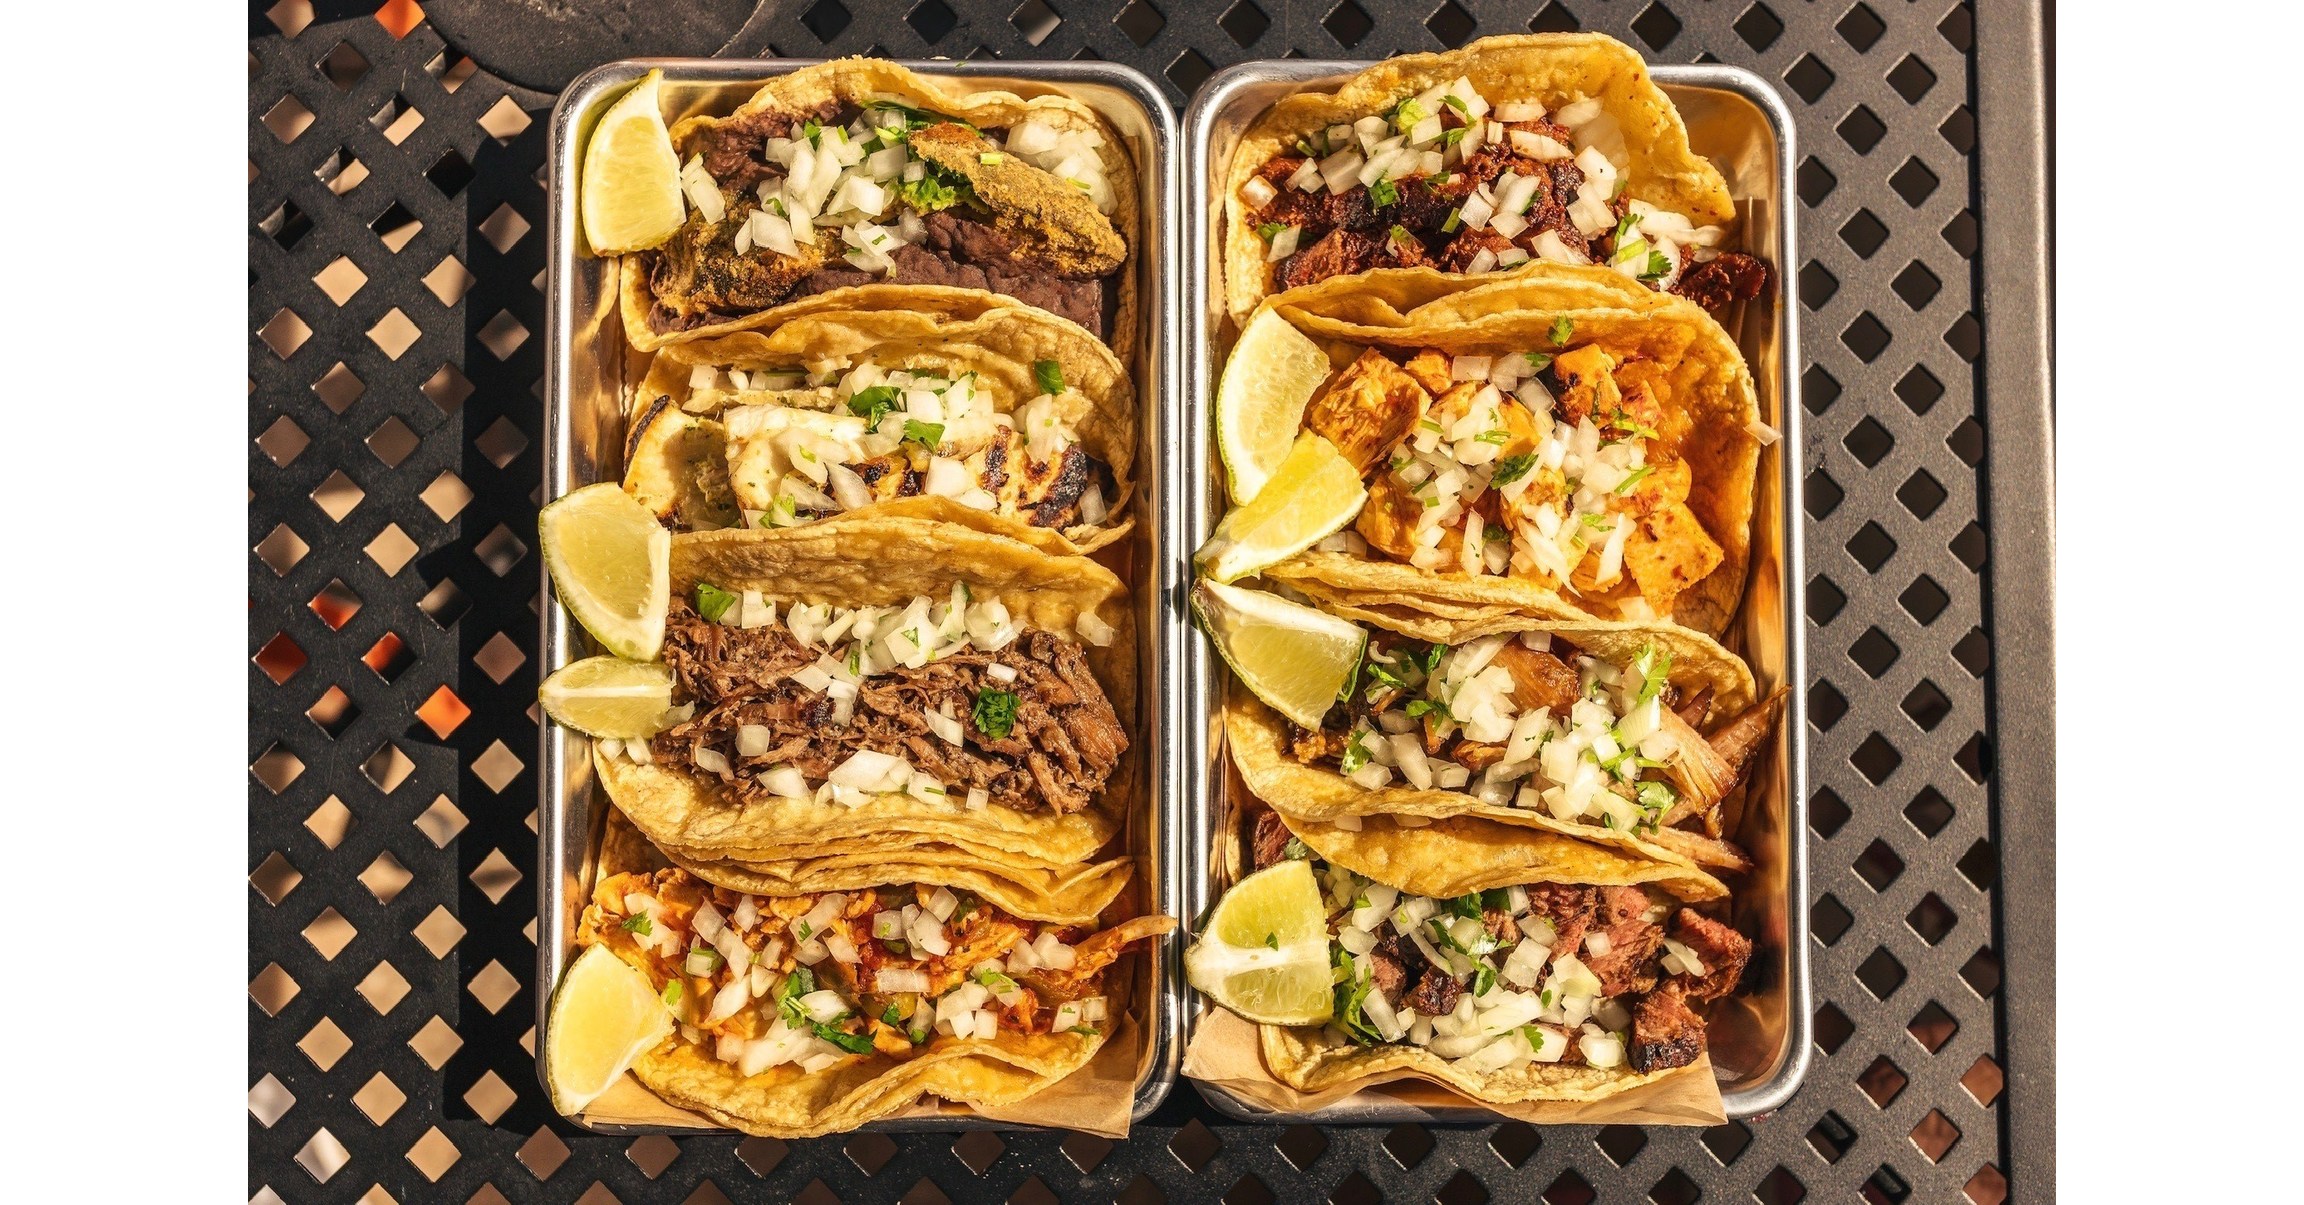 Mexican Restaurant Supplies: Taco Equipment, Food, & More